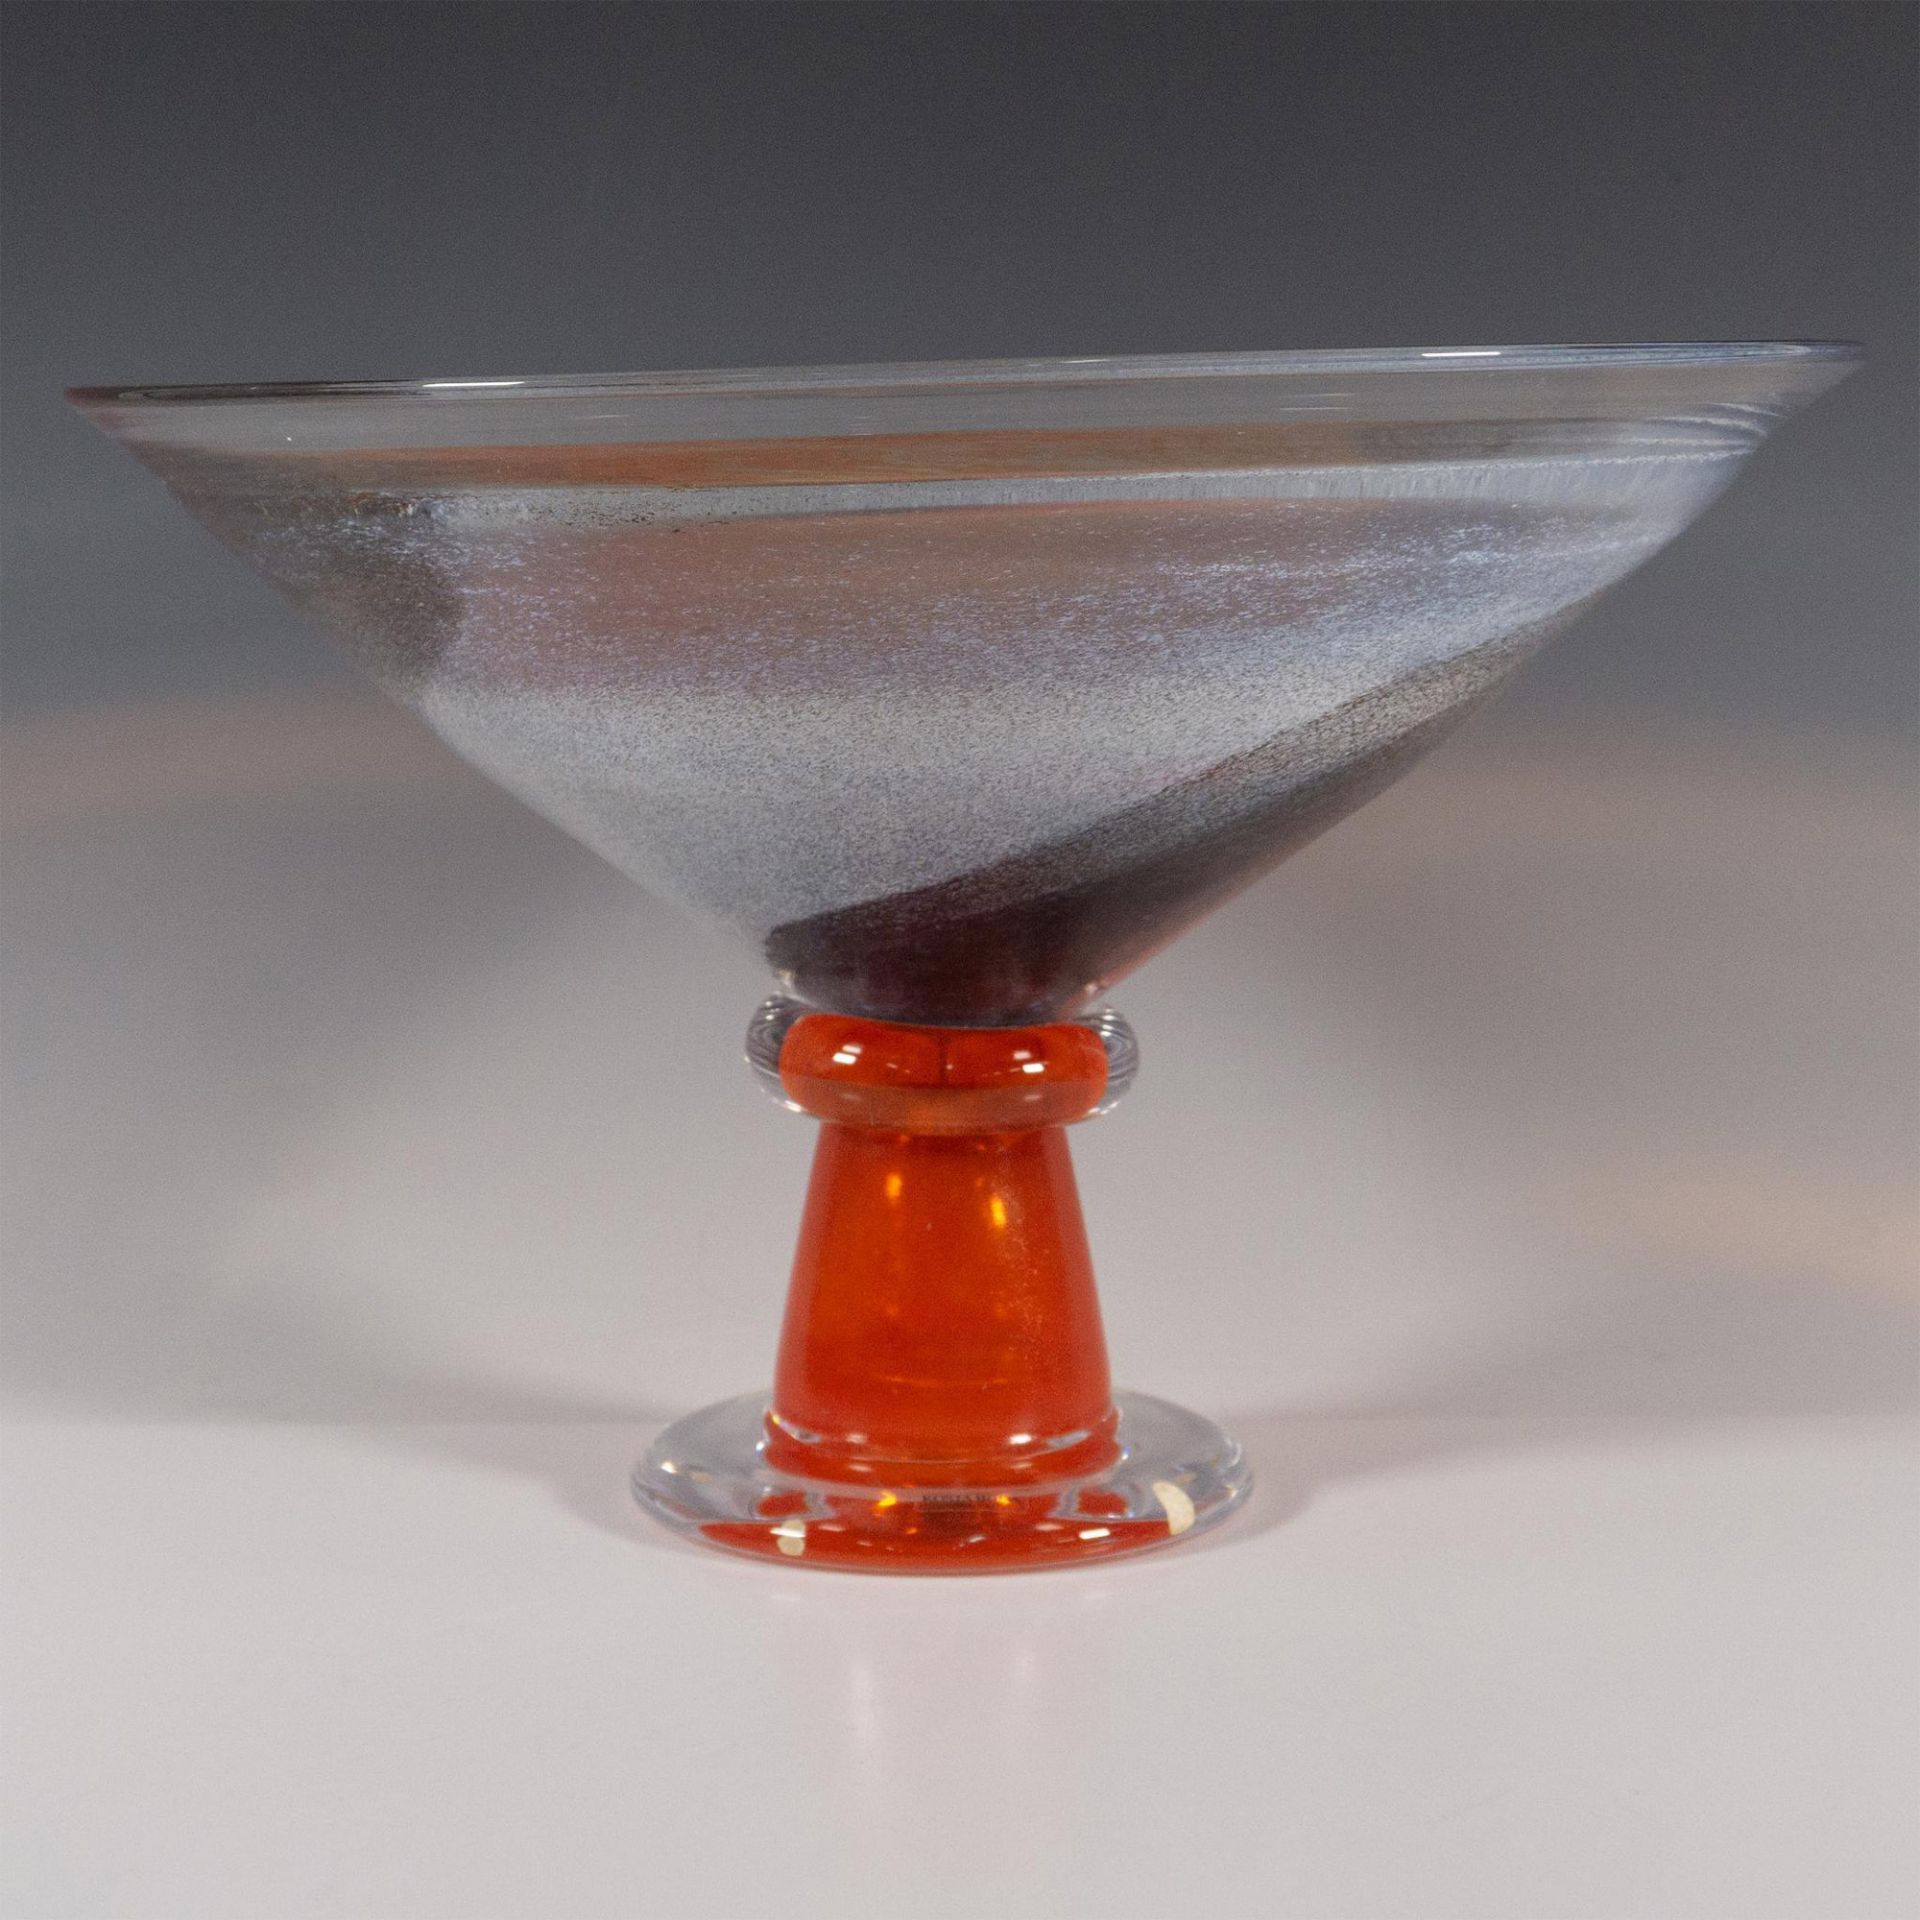 Kosta Boda by Kjell Engman Art Glass Footed Bowl - Image 2 of 4